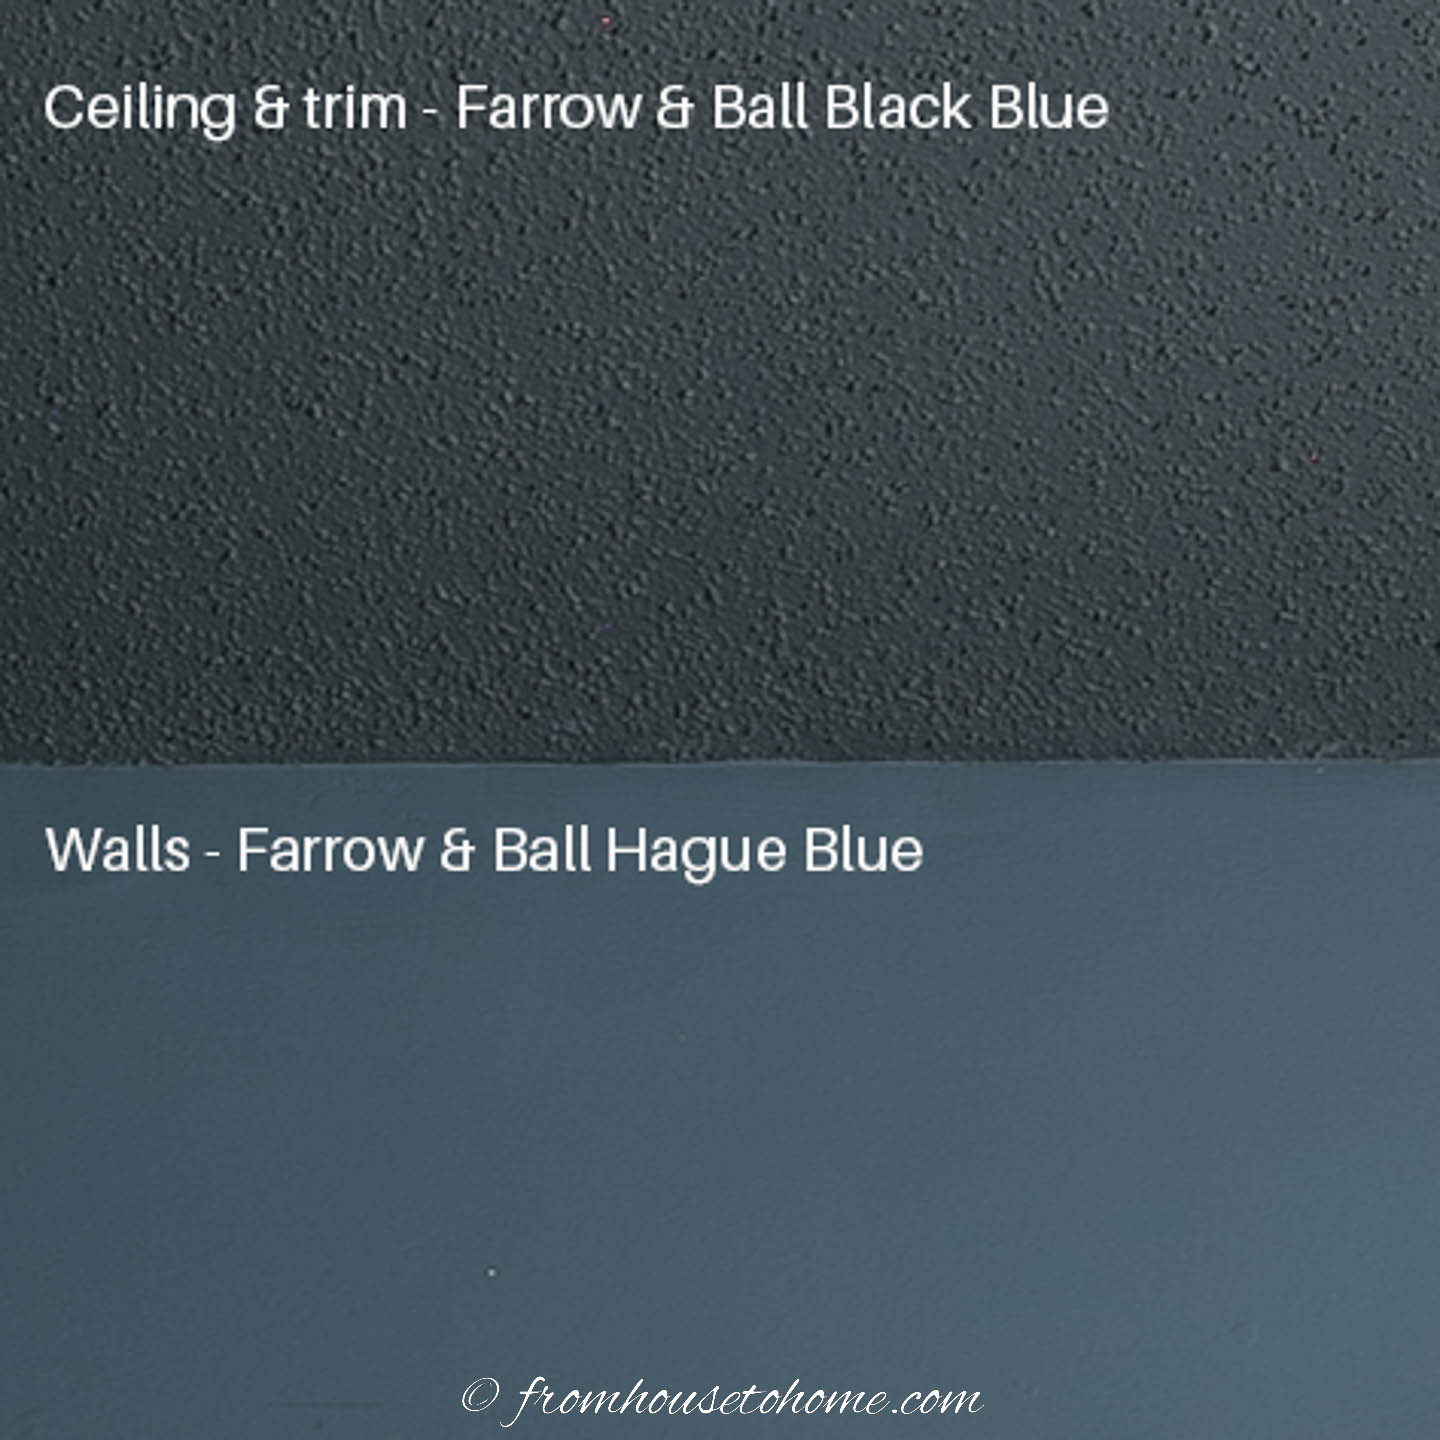 Farrow & Ball Black Blue and Hague Blue